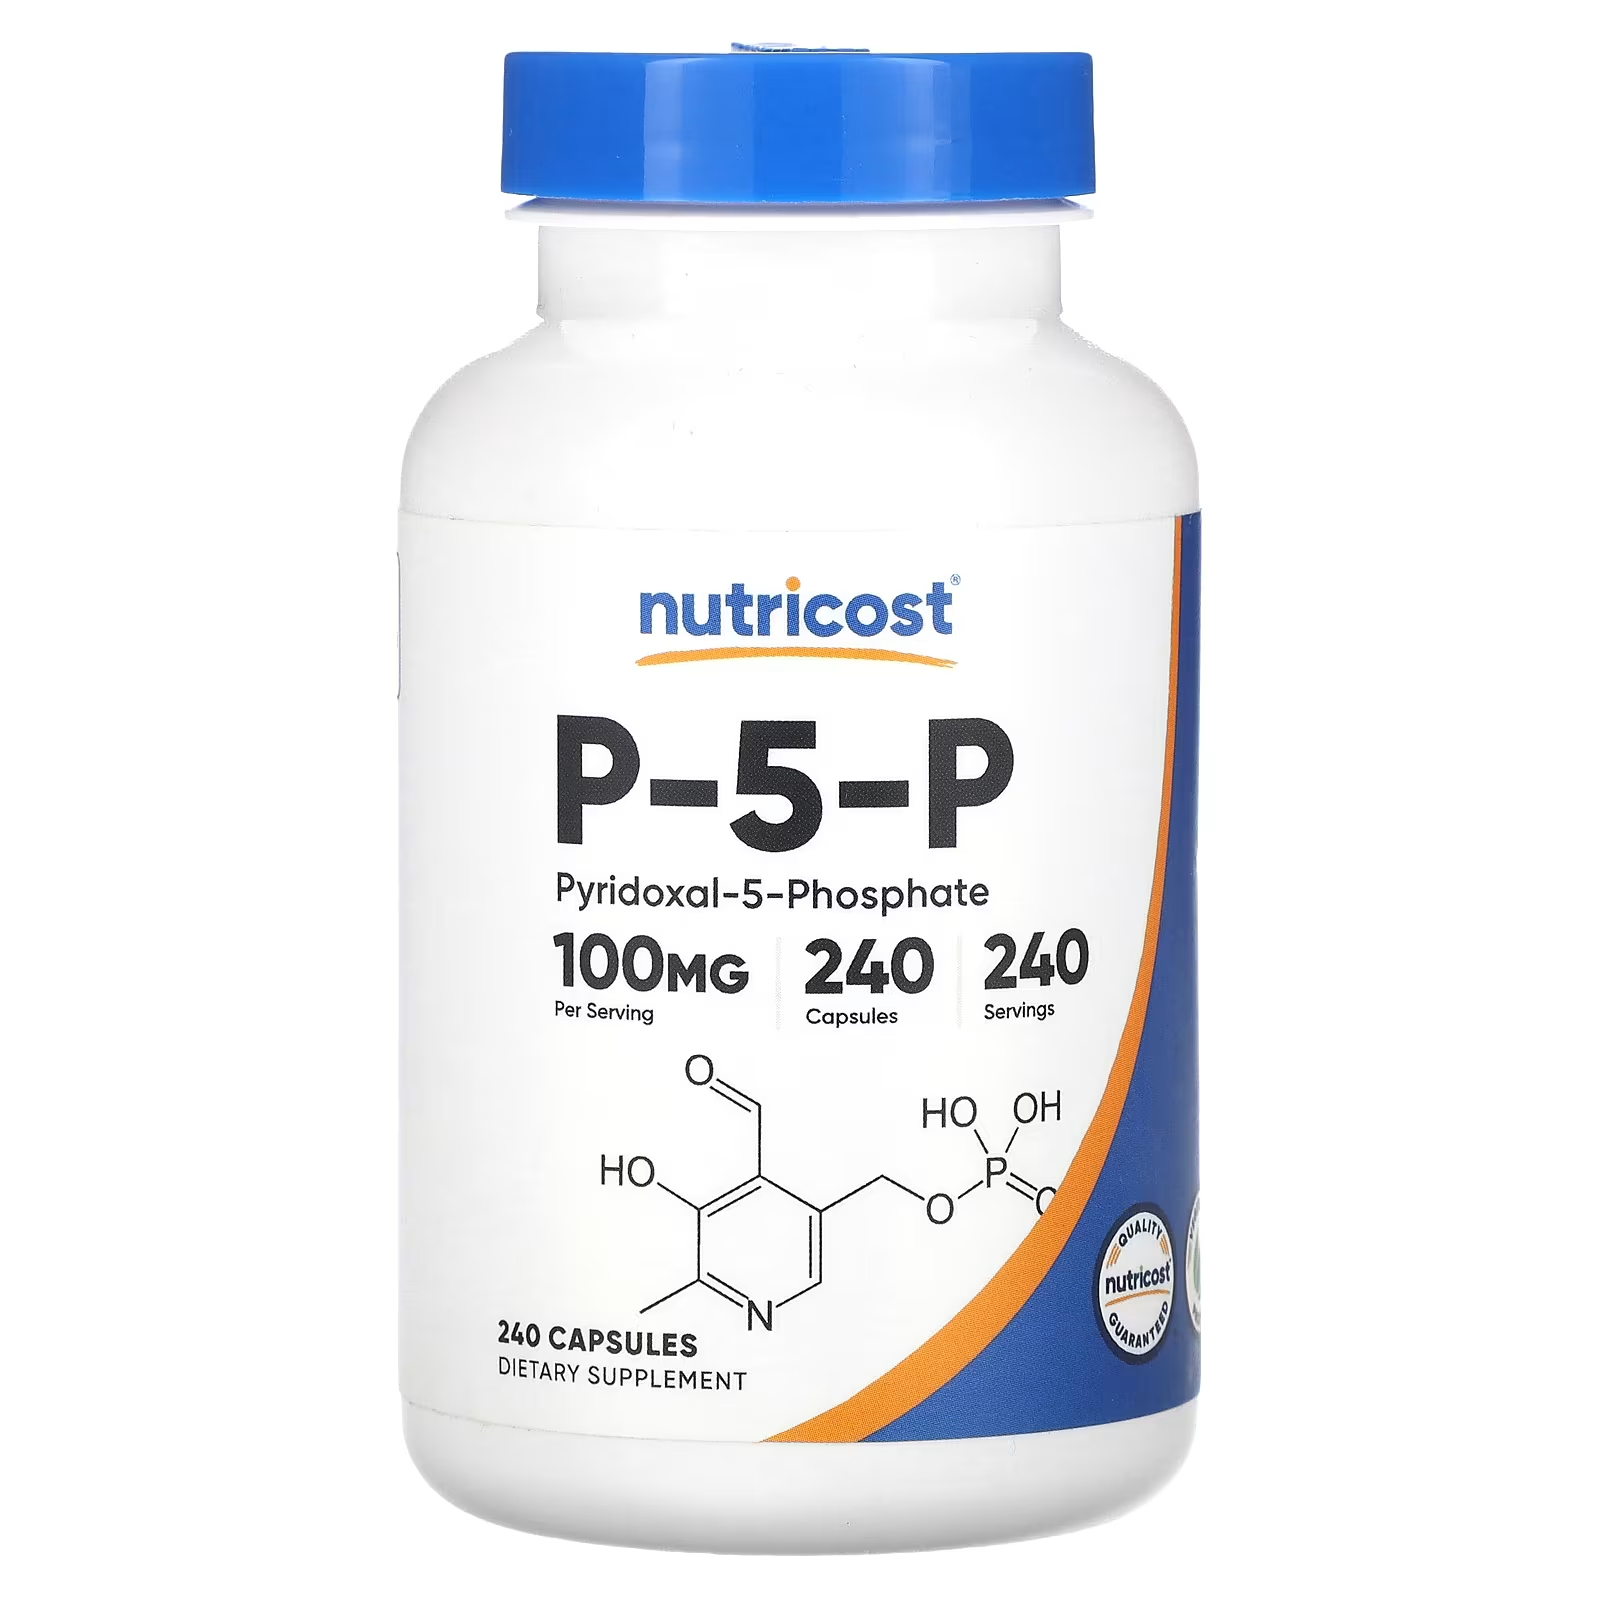 Пищевая добавка Nutricost P-5-P 100 мг, 240 капсул пищевая добавка nutricost p 5 p 100 мг 240 капсул